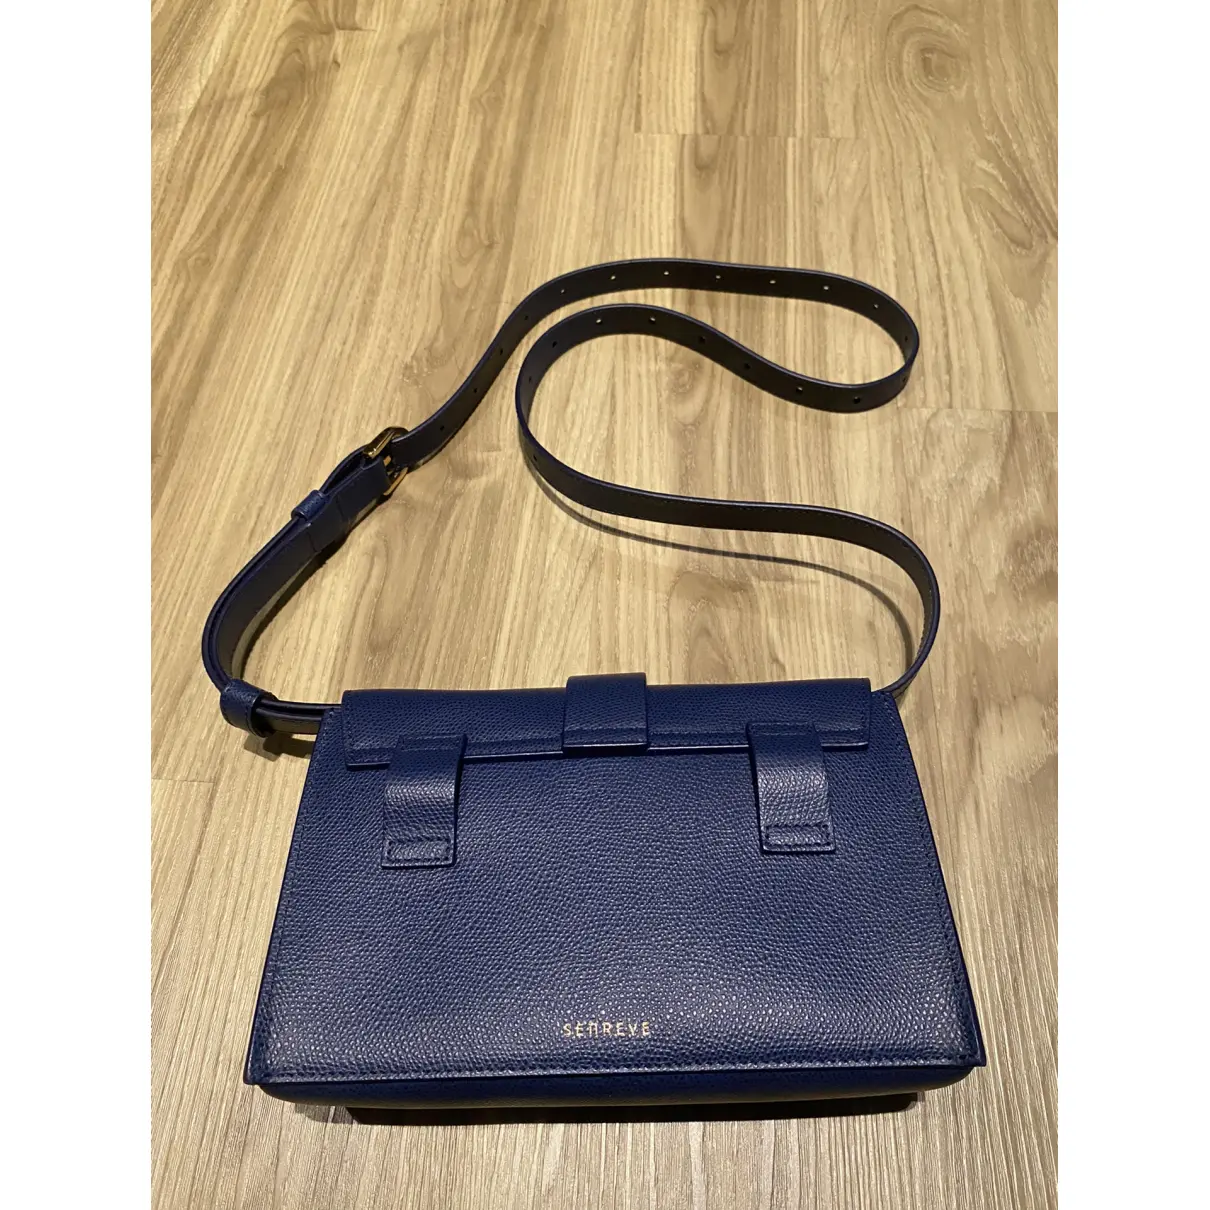 Buy Senreve Leather mini bag online